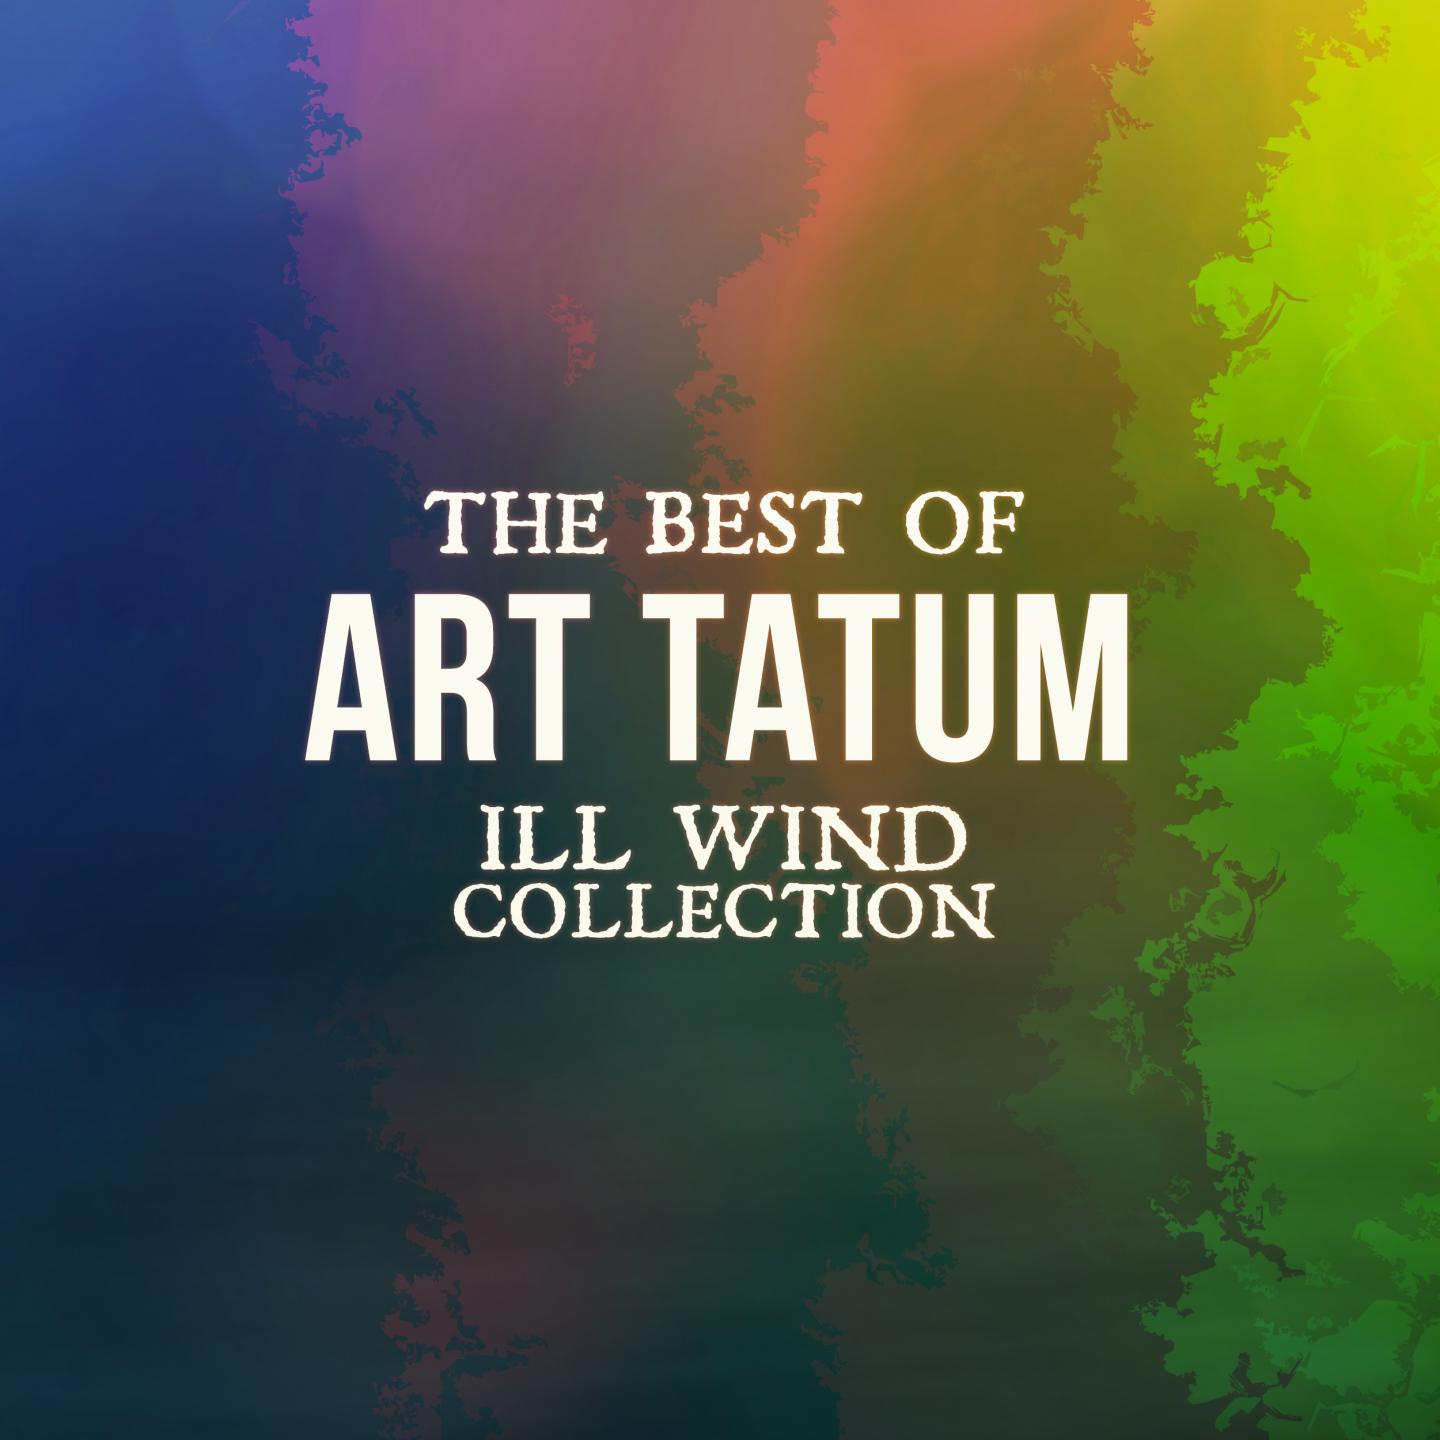 The Best Of Art Tatum (Ill Wind Collection)